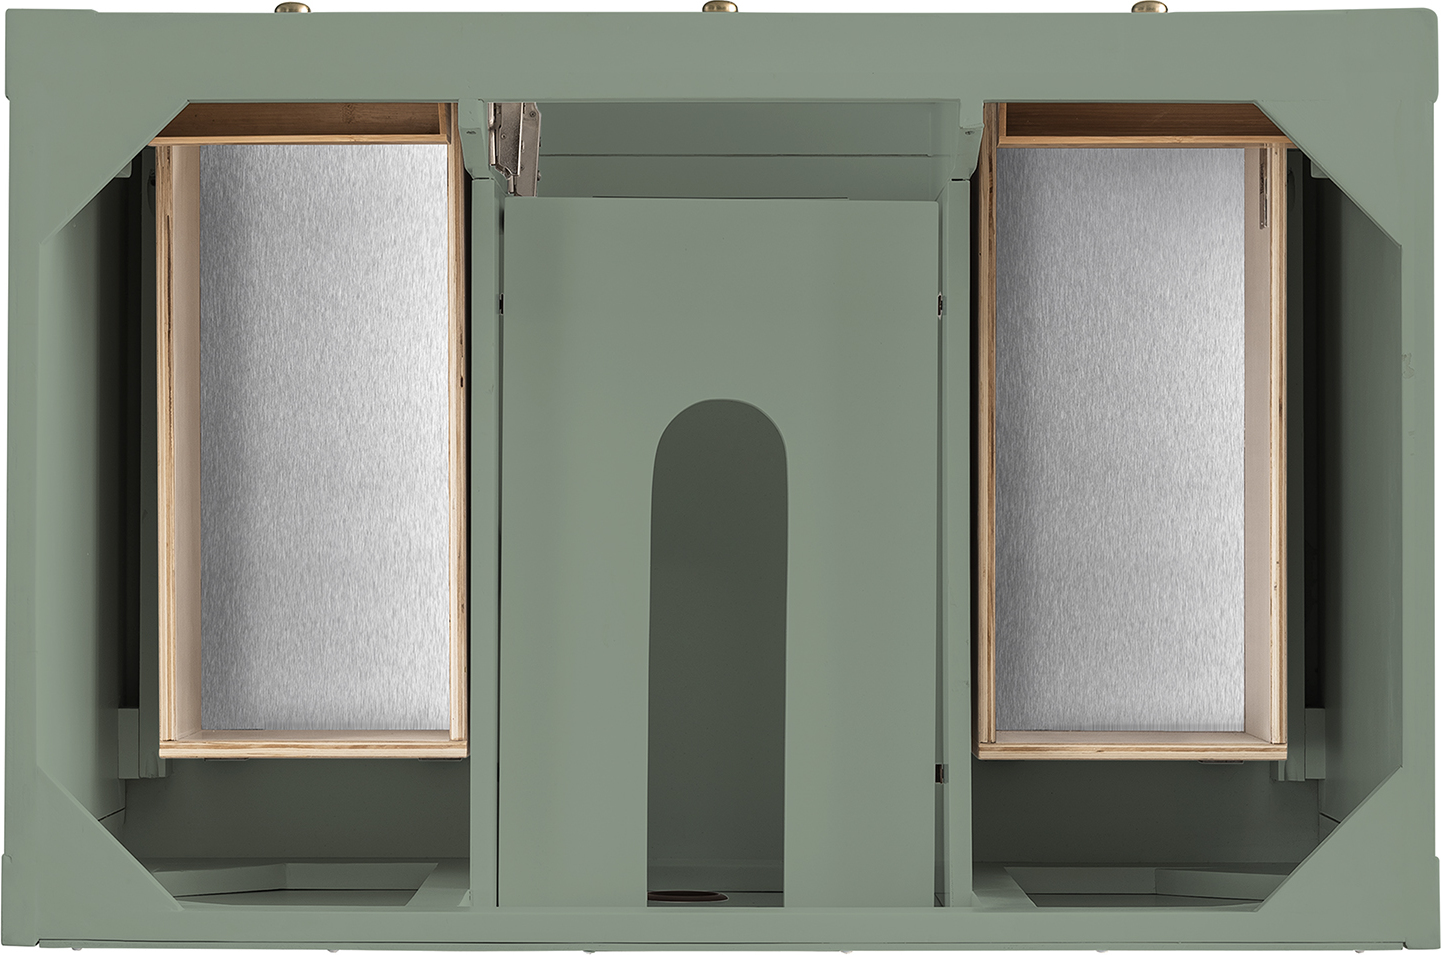 double vanity bathroom 60 inch James Martin Cabinet Smokey Celadon Modern Farmhouse, Transitional